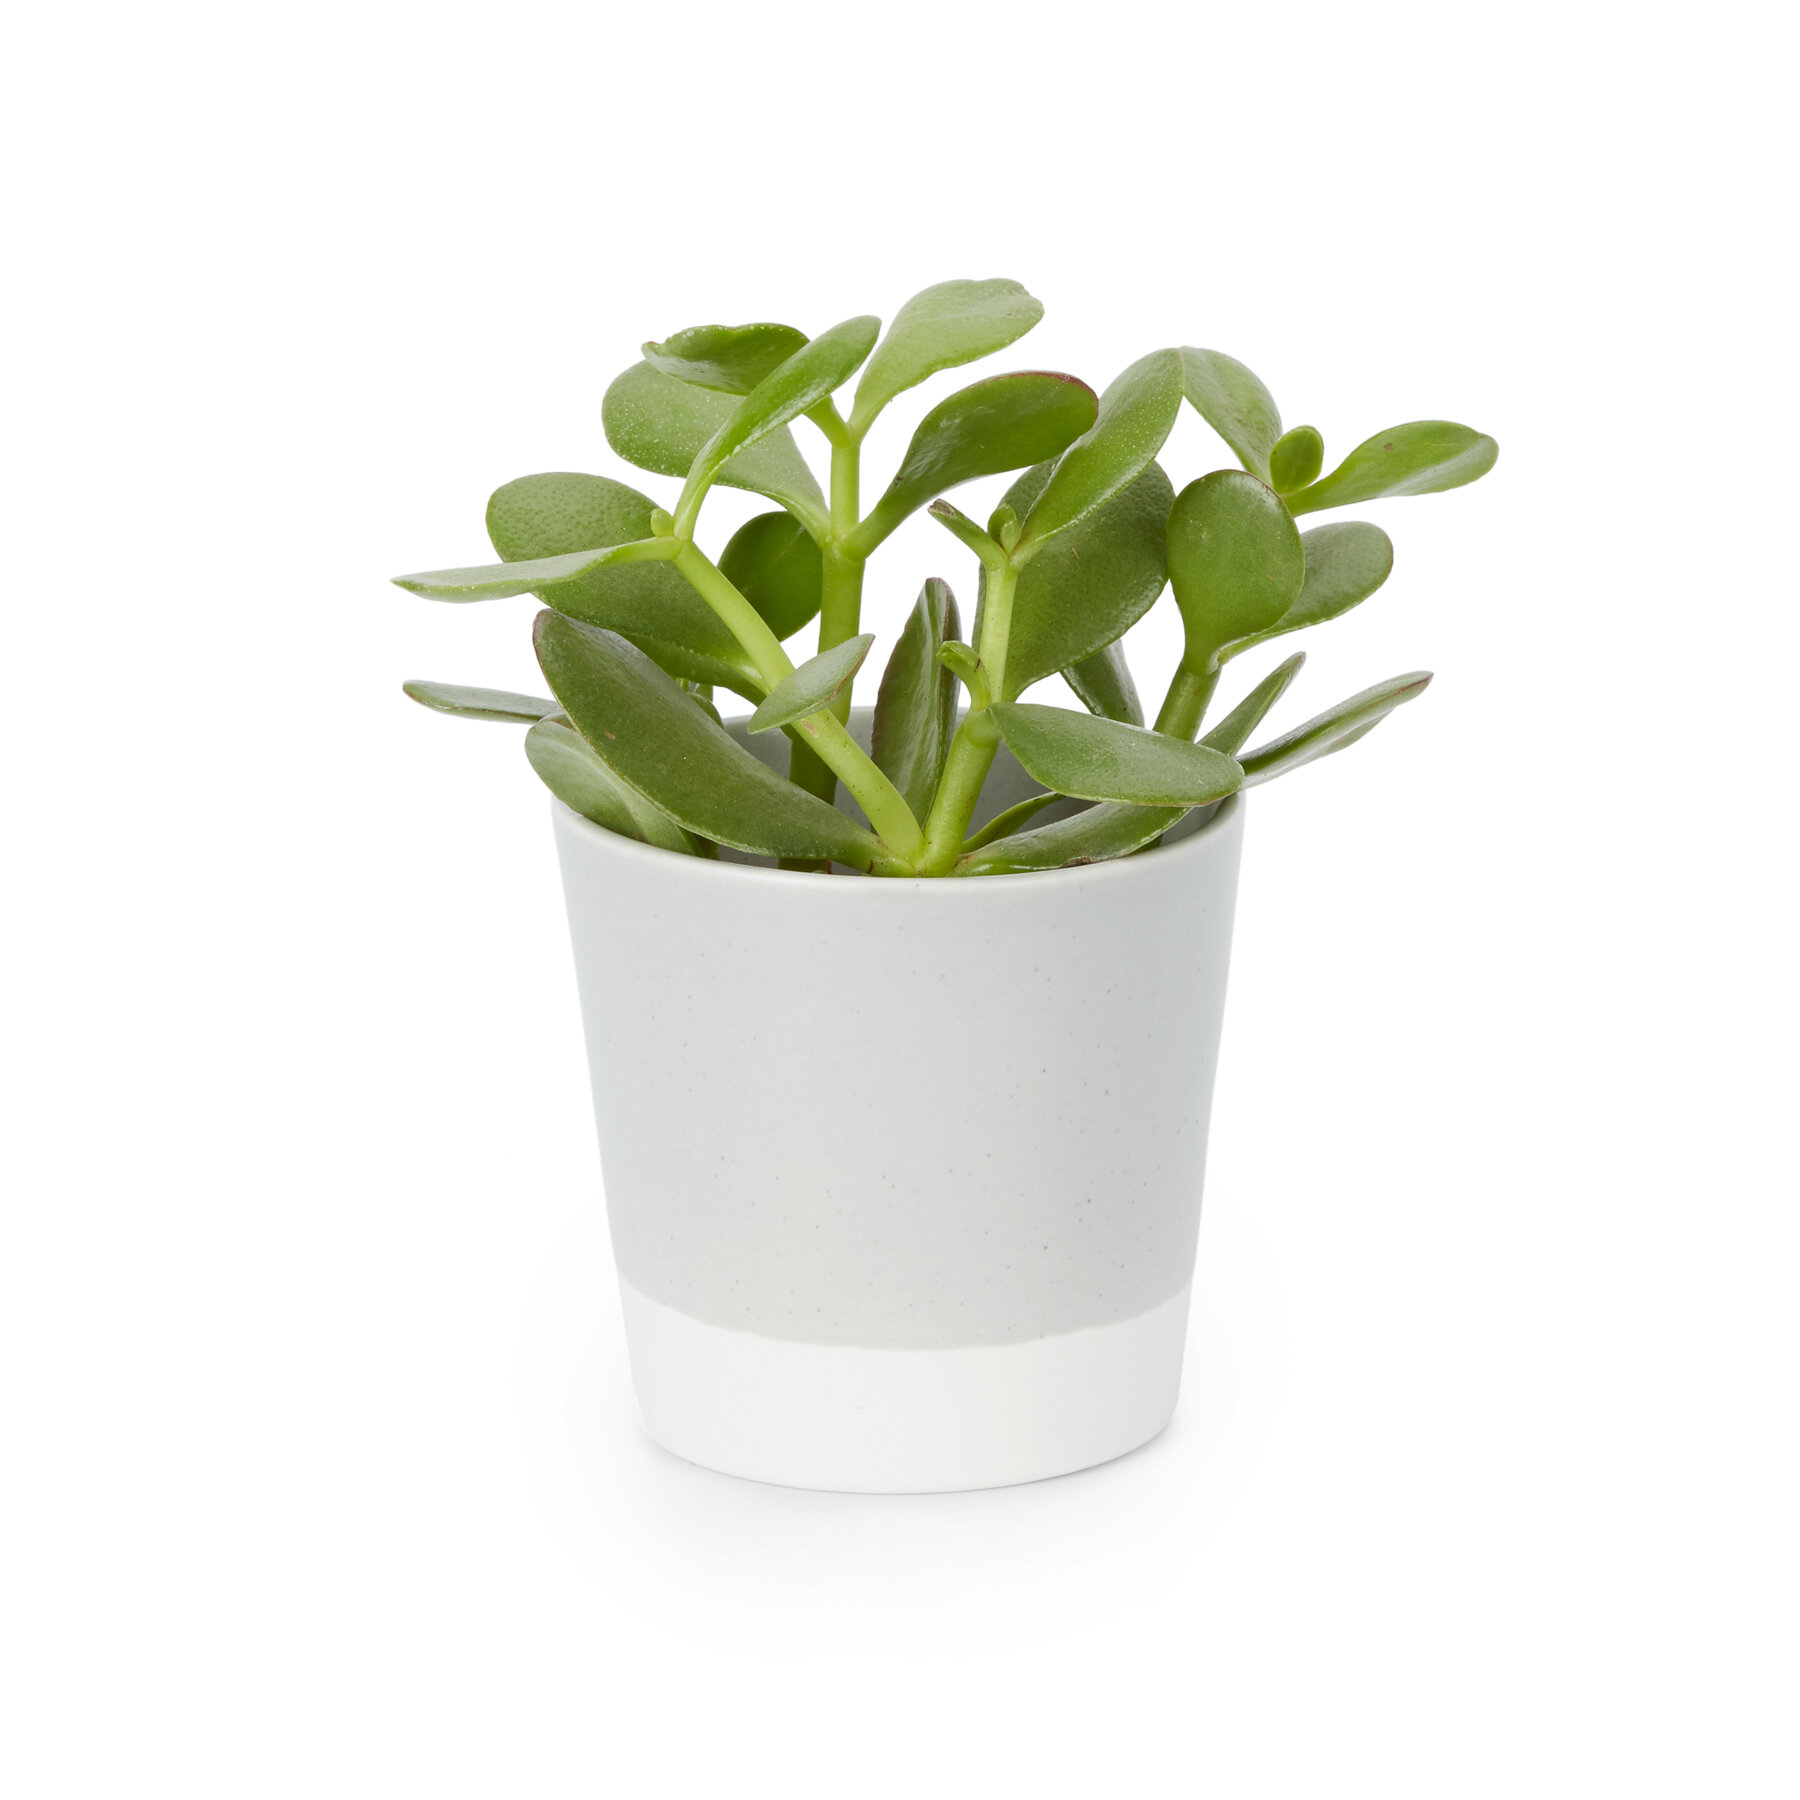 on-white-ceramic-planter-photo-example